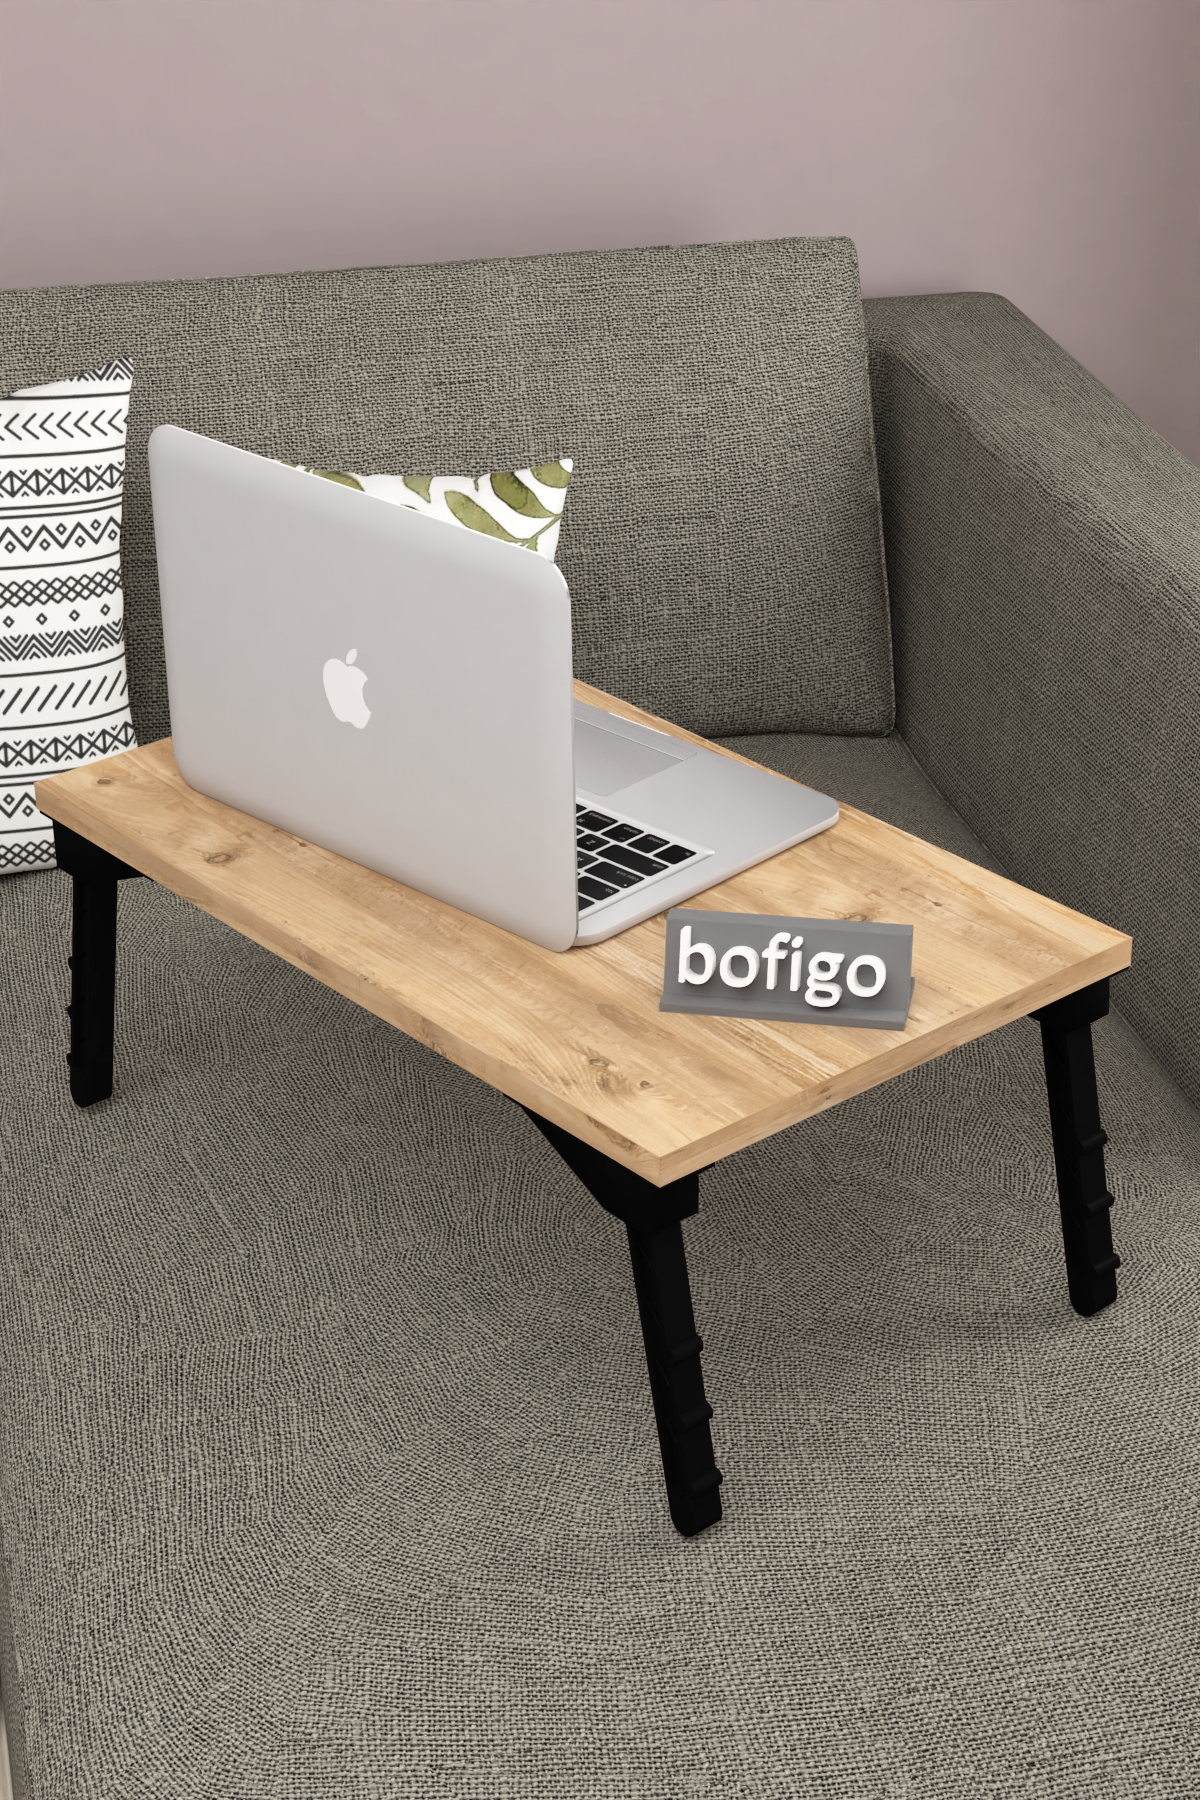 Bofigo Laptop Table Breakfast Table Study Table Pine